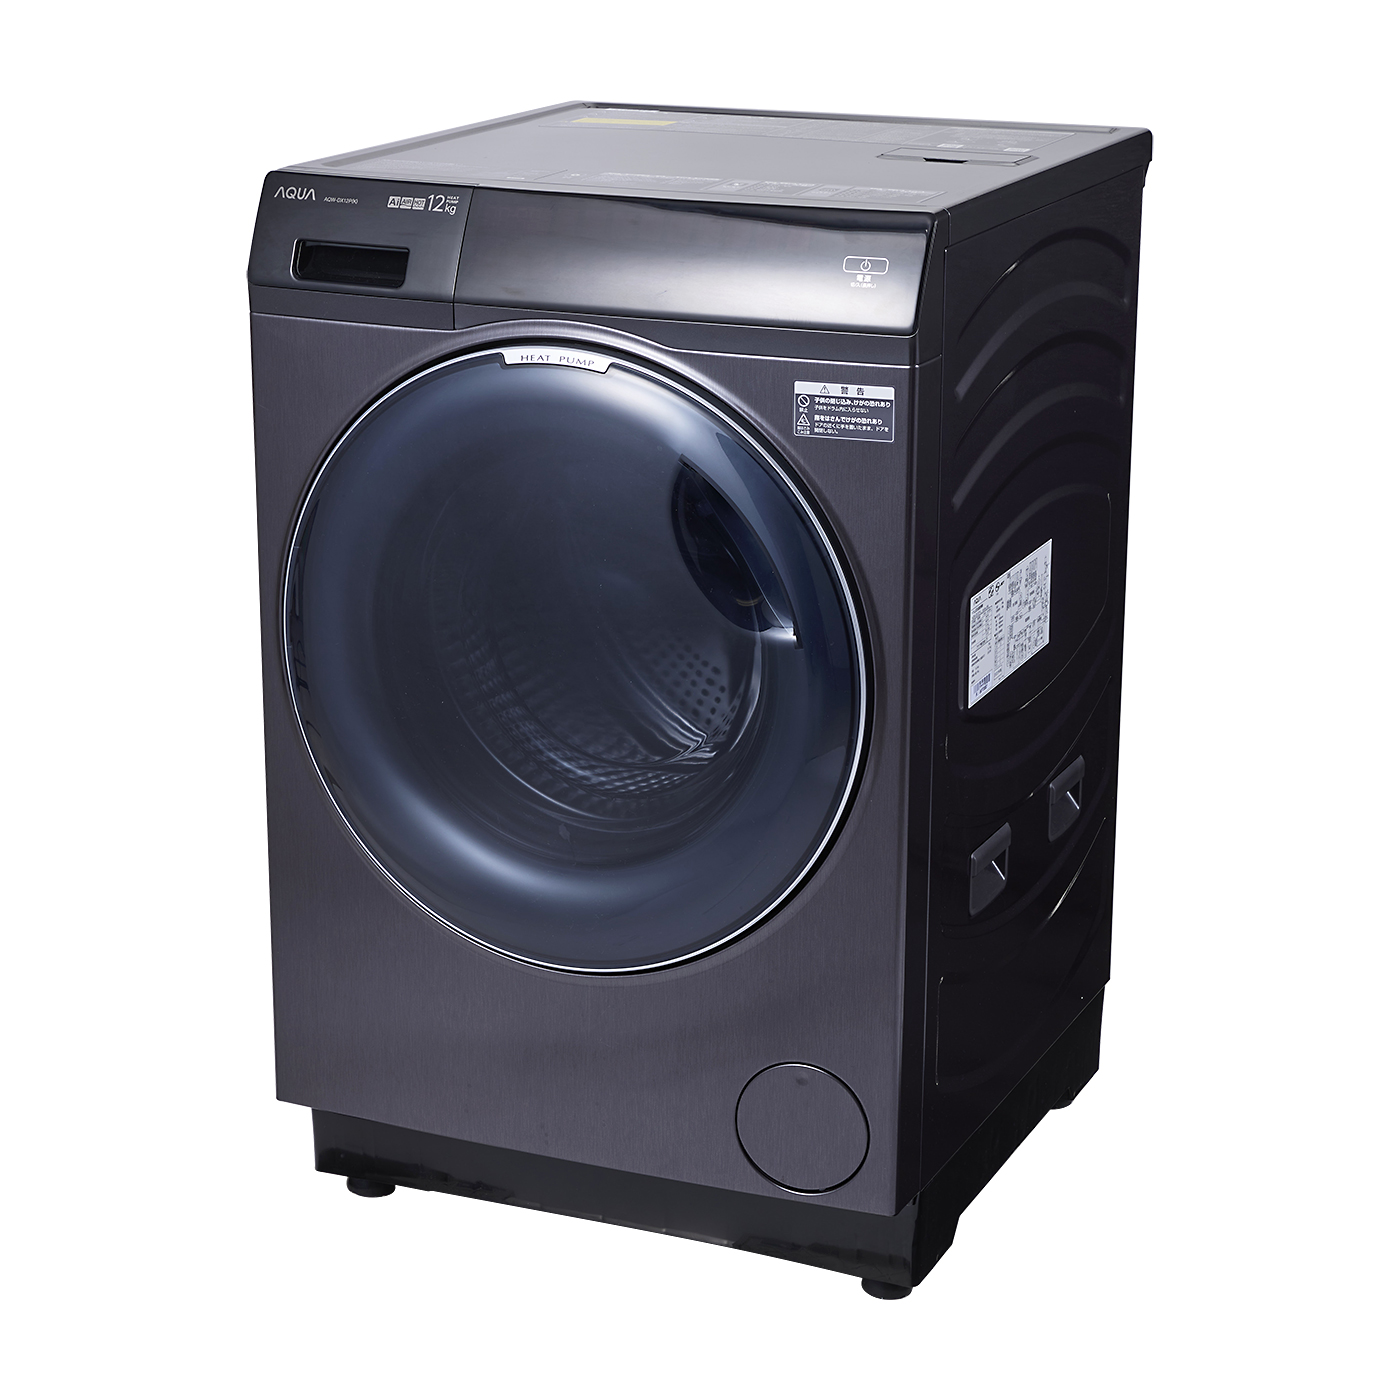 22年☆IRIS OHYAMA 自動投入ドラム式洗濯乾燥機HDK842Z - 洗濯機